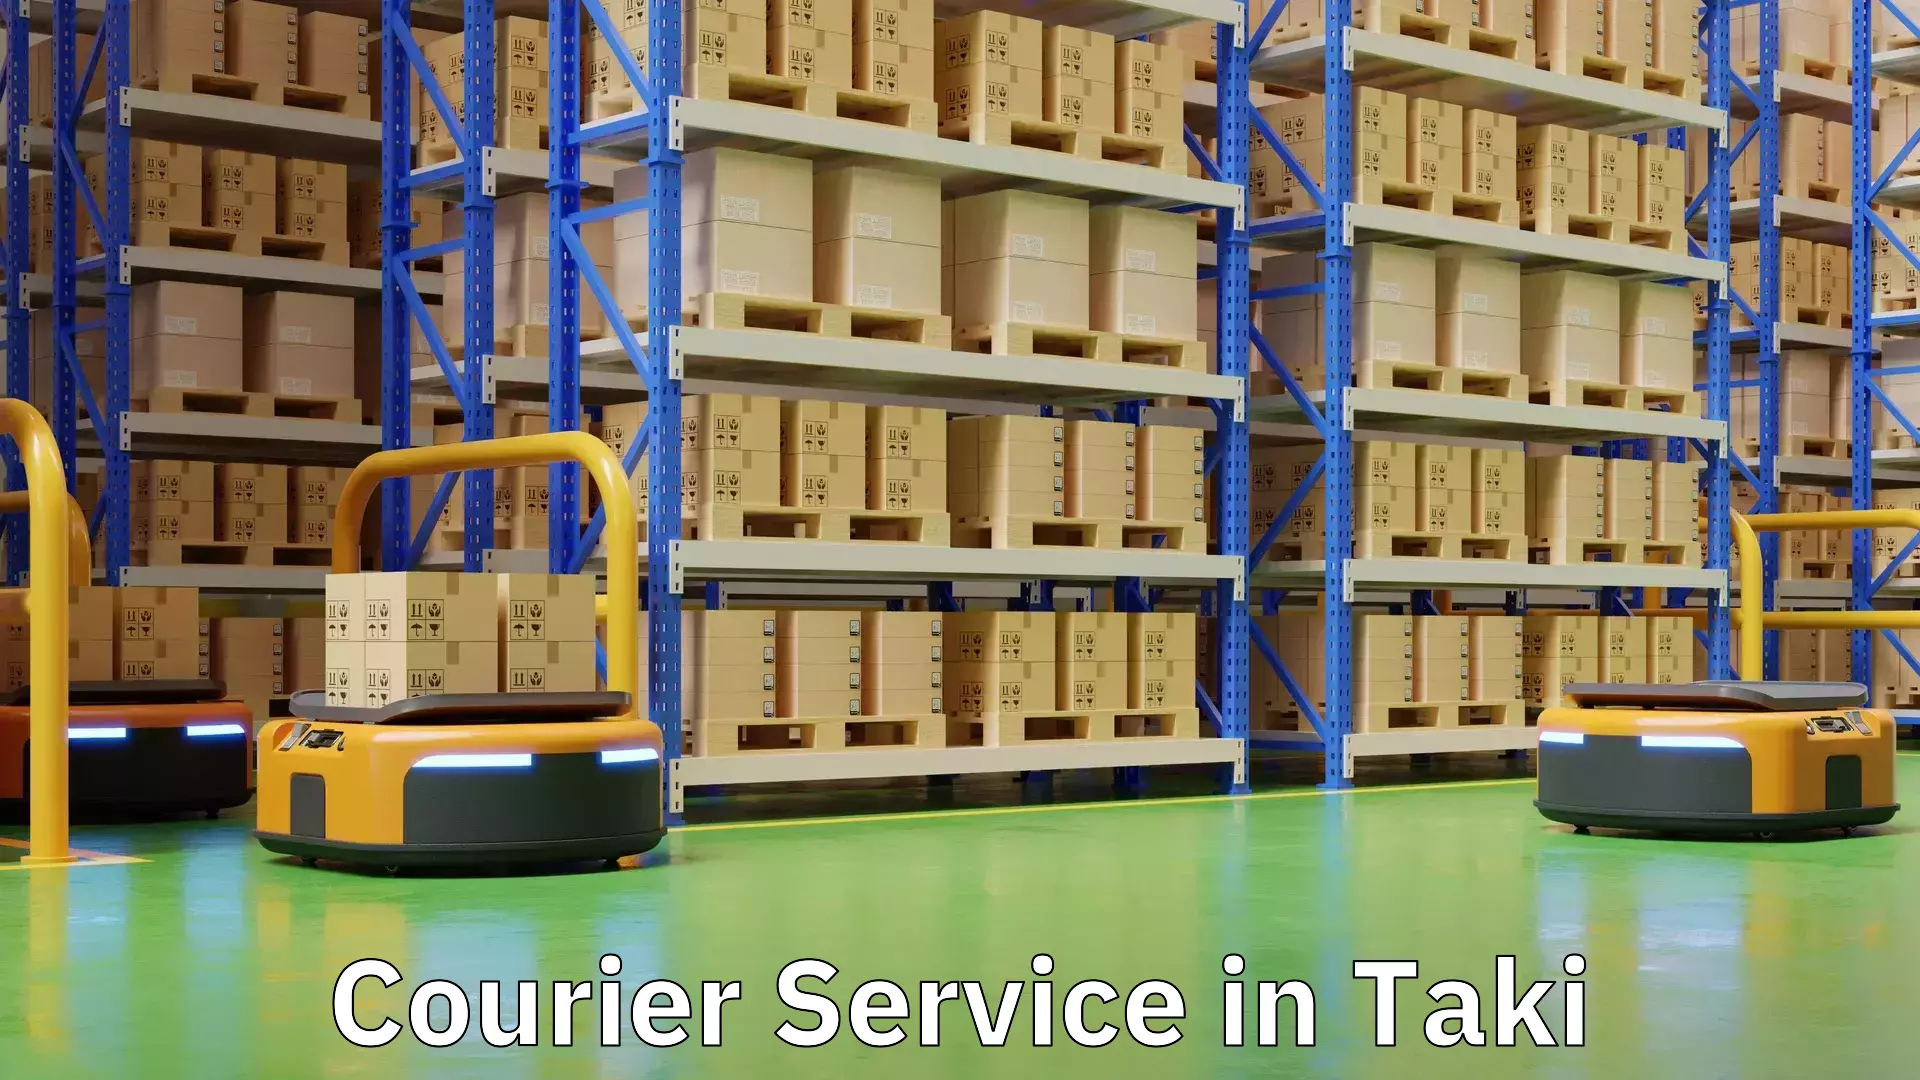 24-hour courier service in Taki